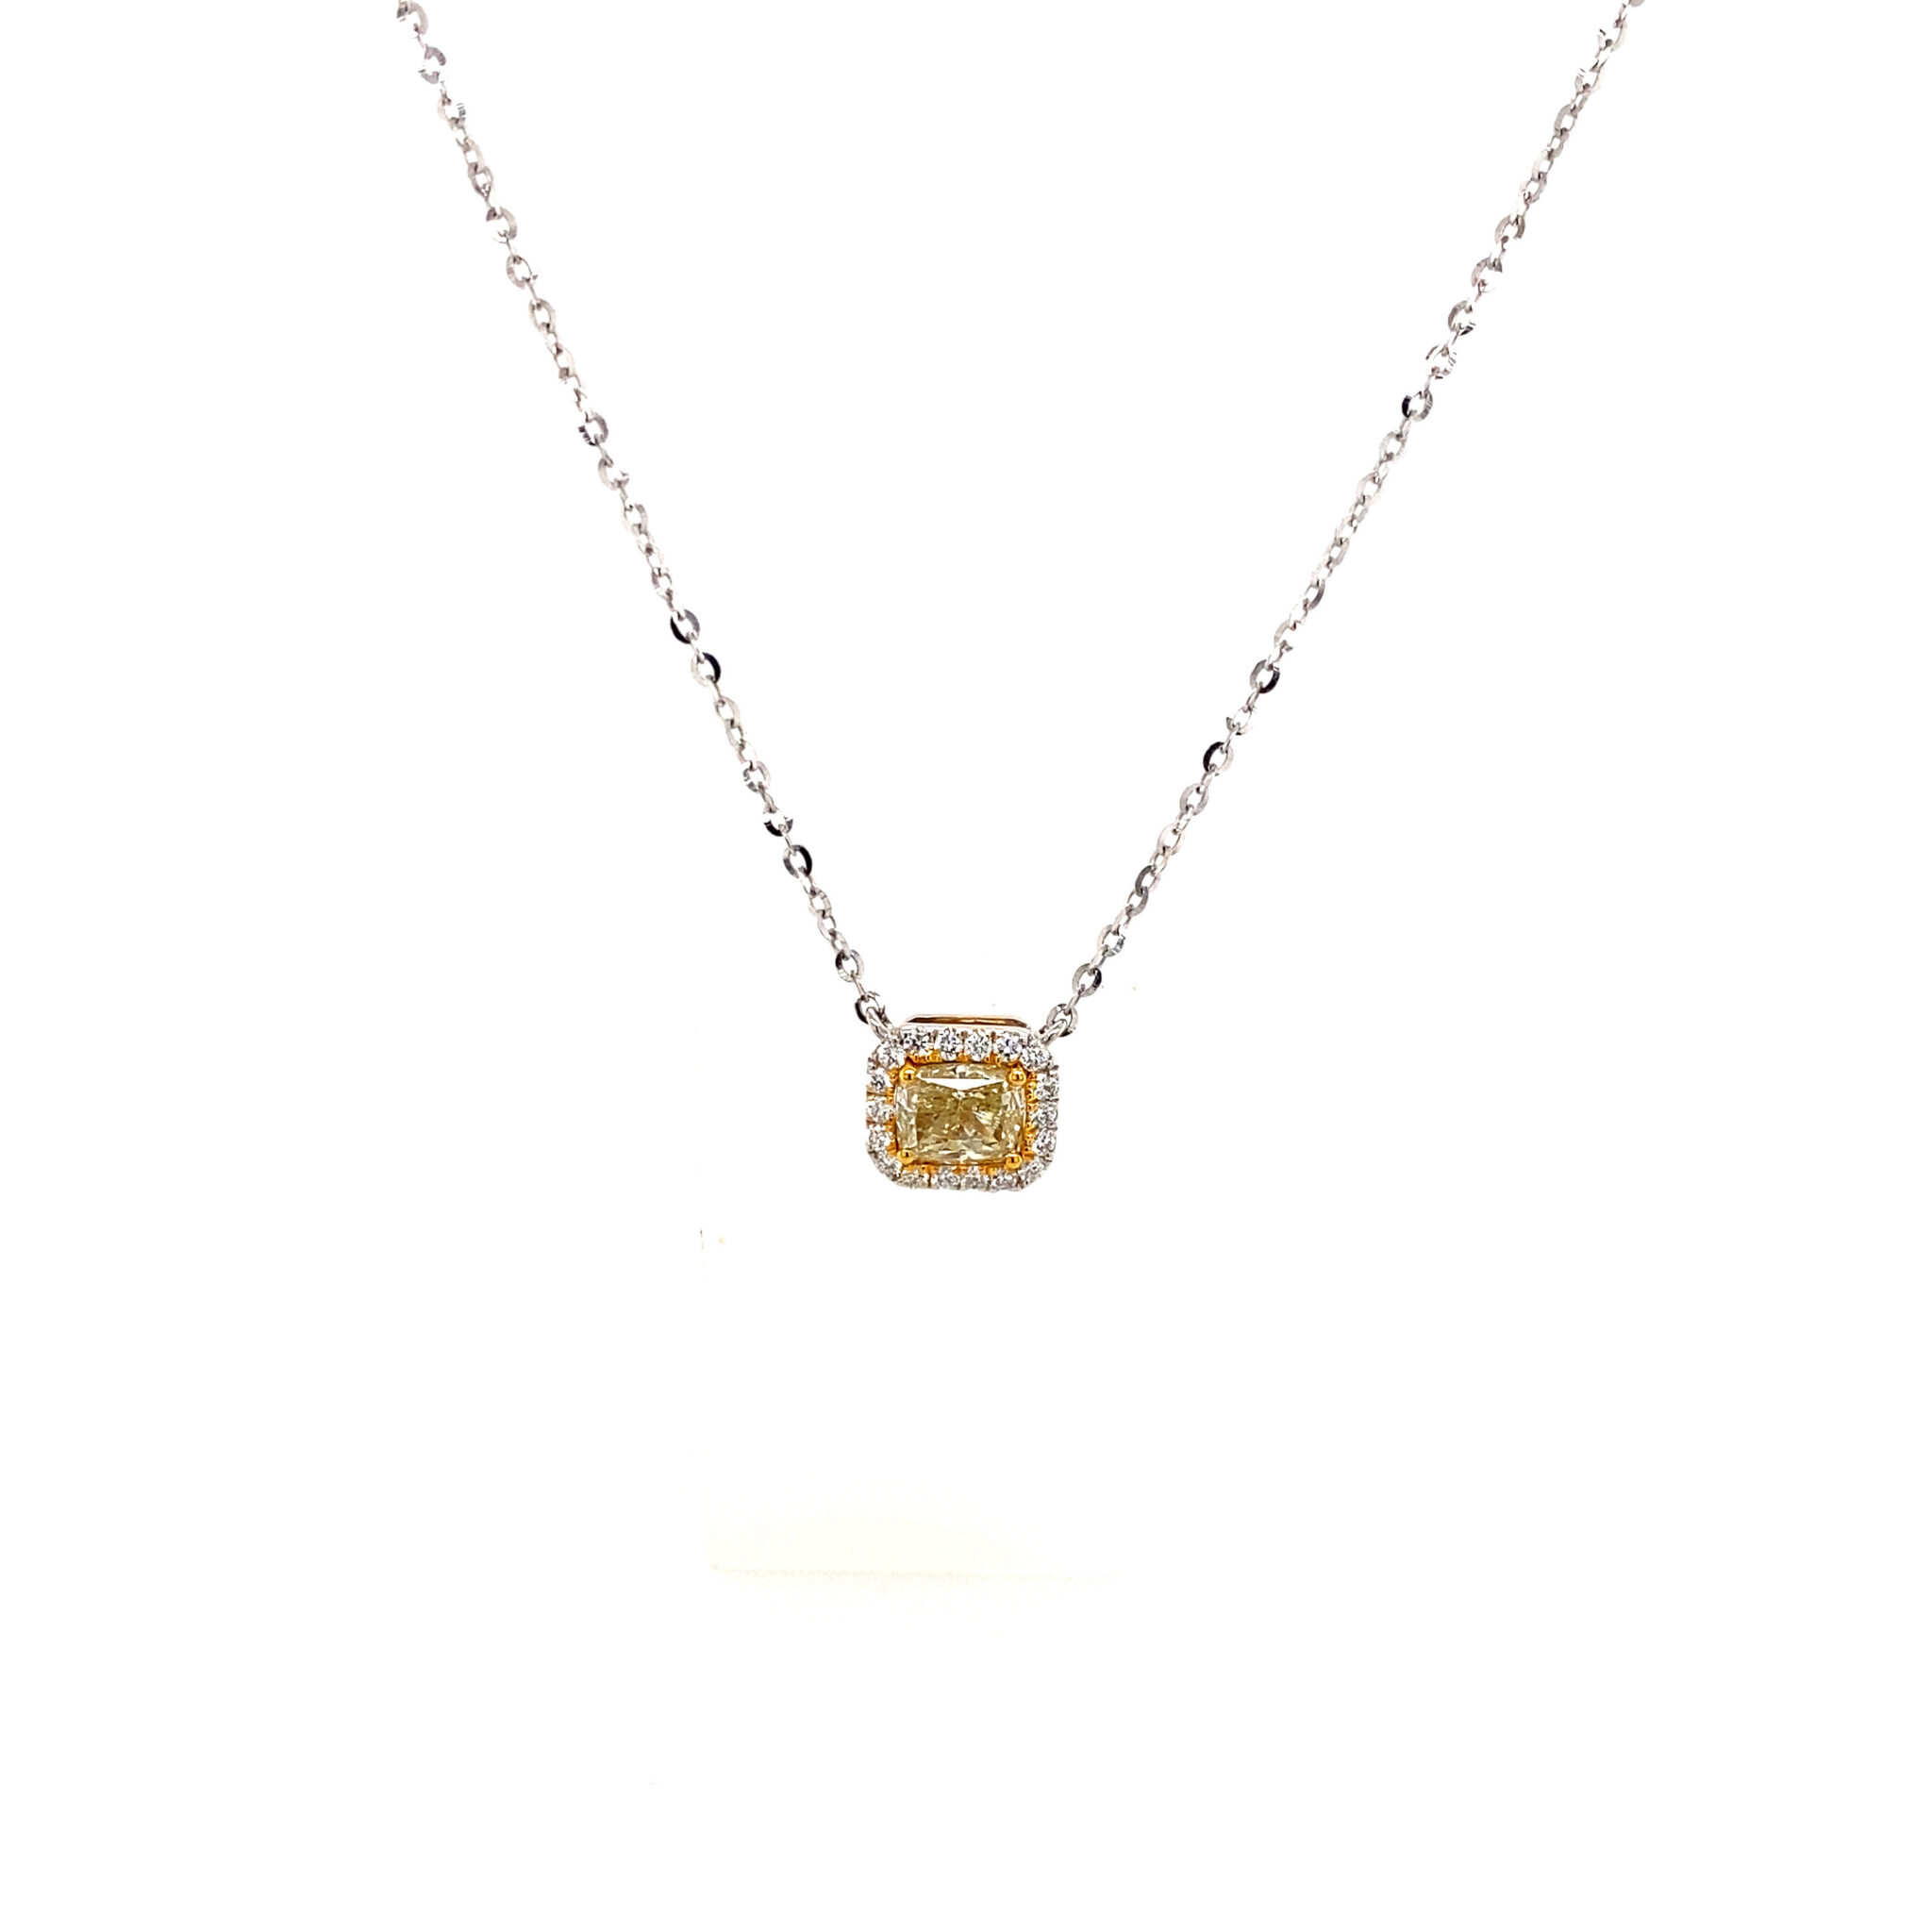 All Diamond Necklaces In Aruba - Shivas Gold & Gems